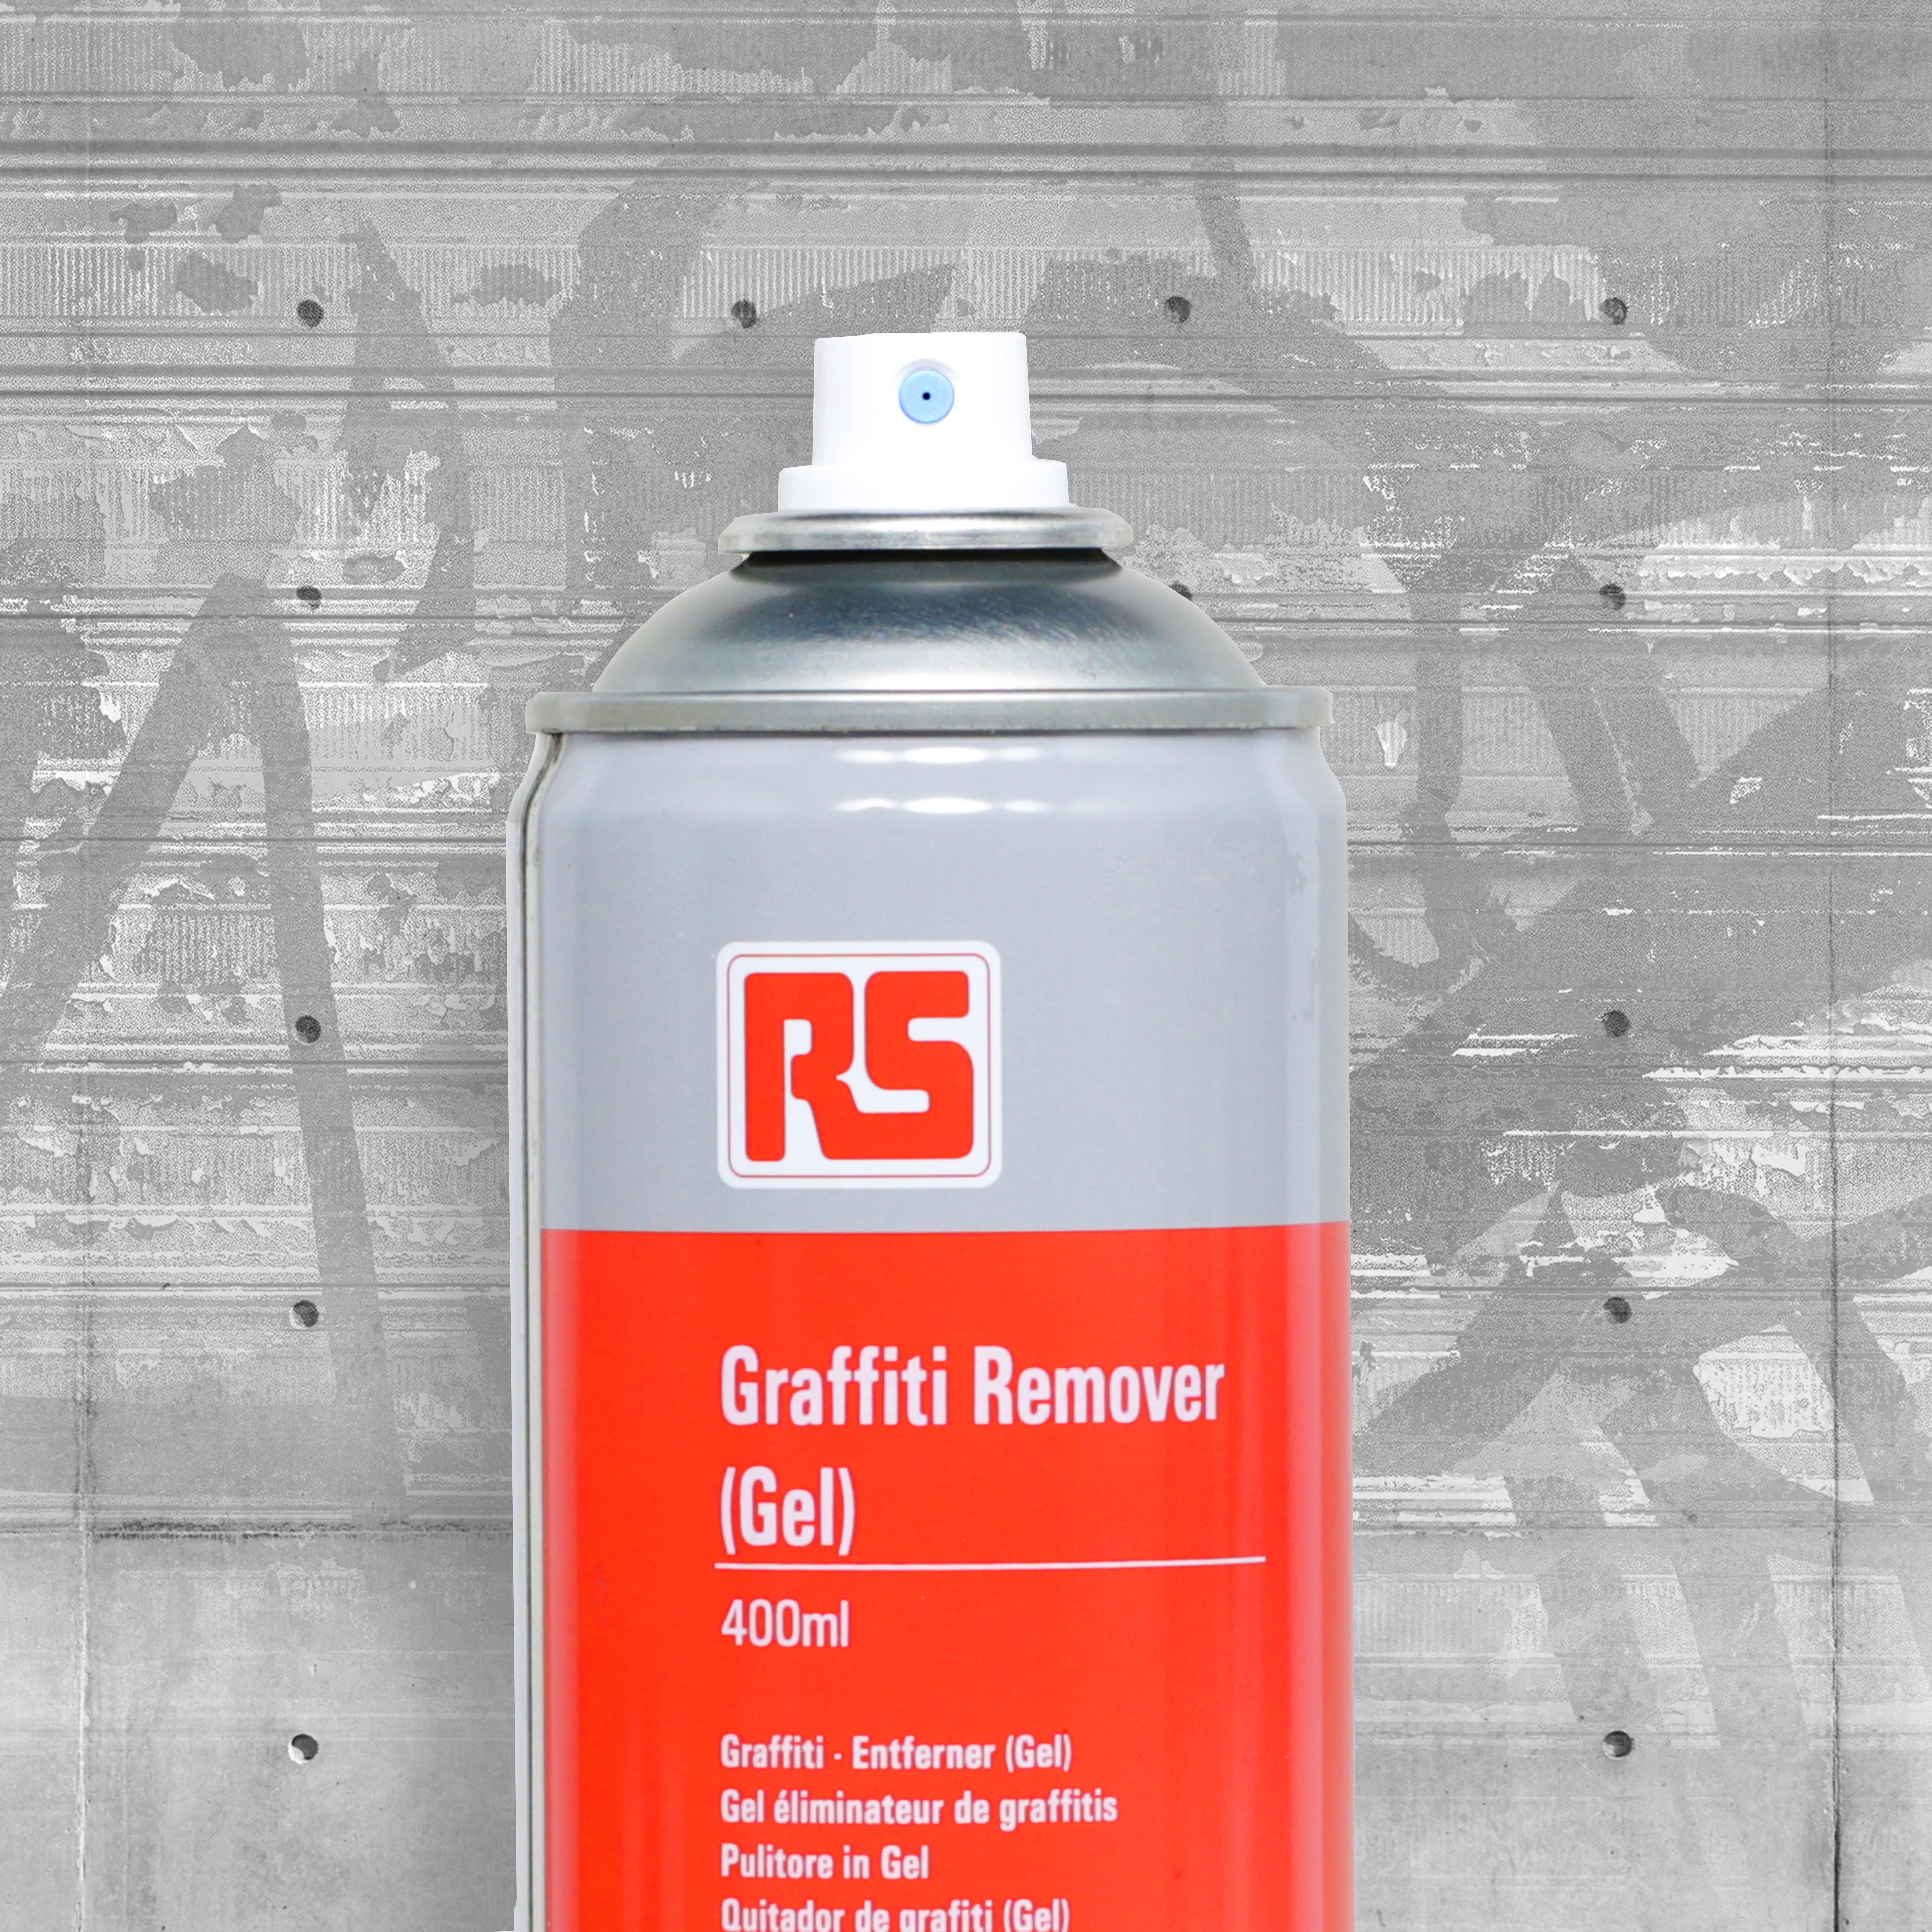 RS Graffiti Remover (Gel) - 400ml